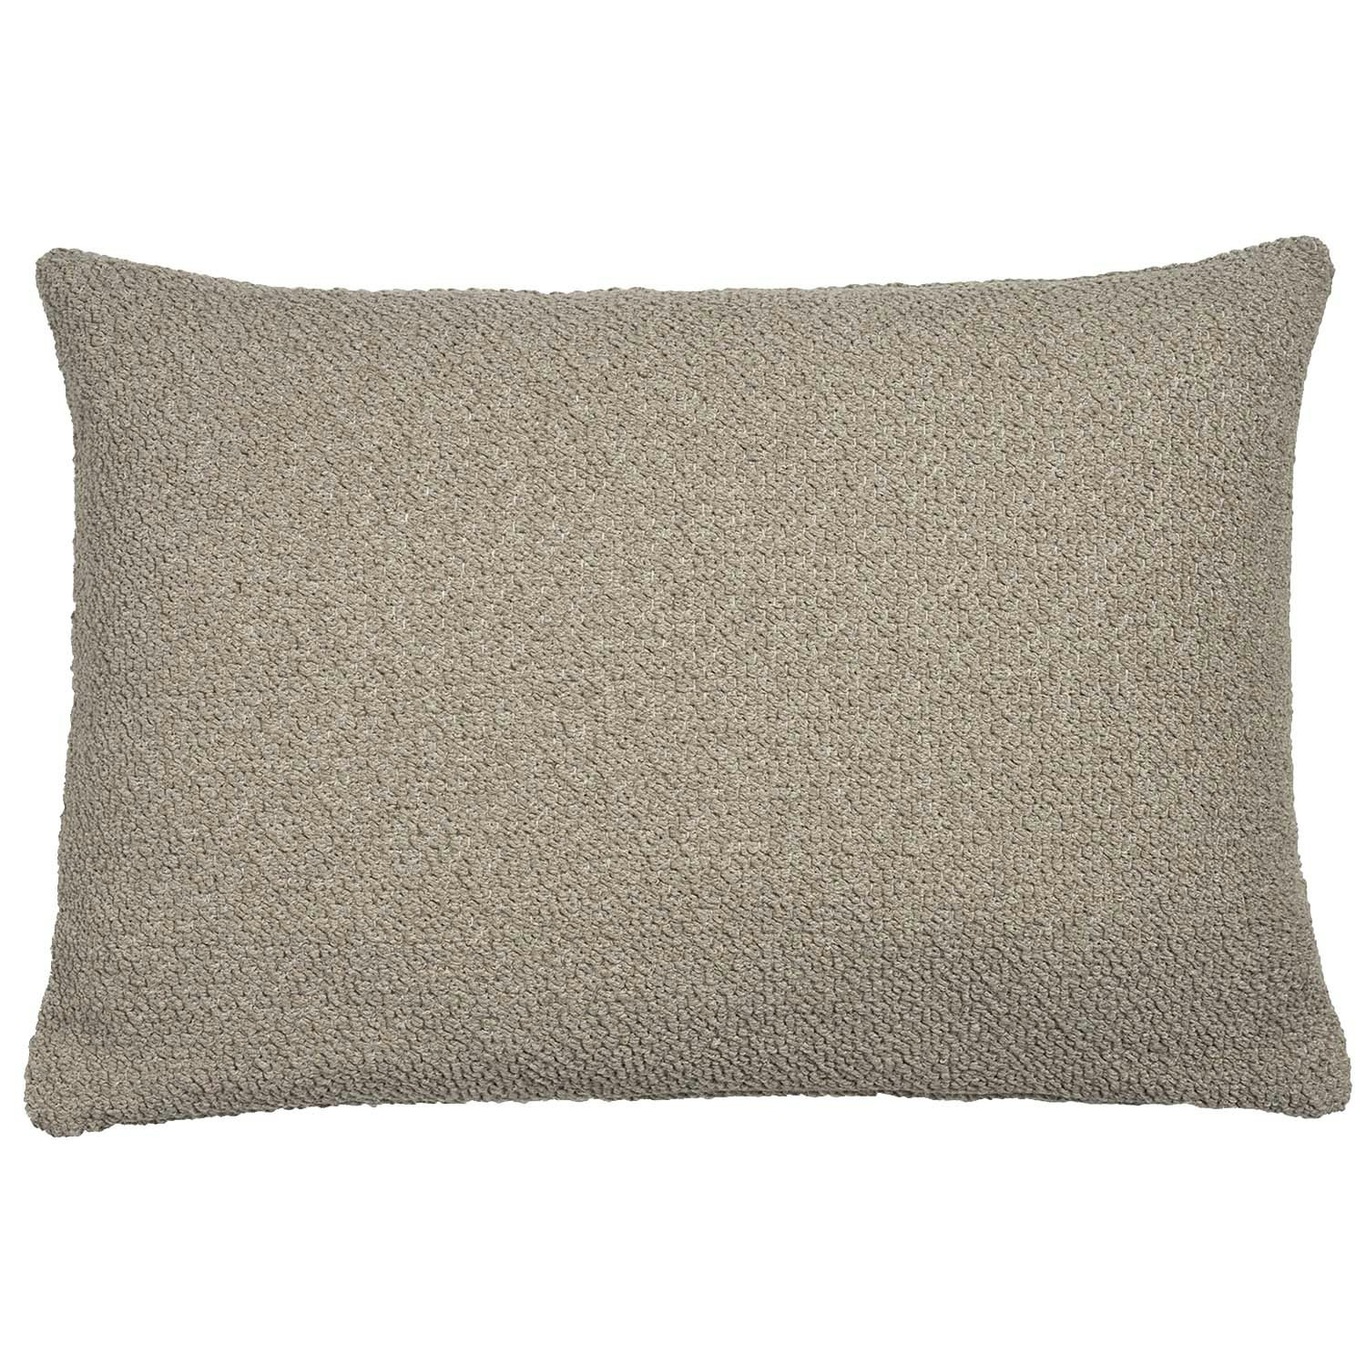 Boucle Outdoor Cushion 40x60 cm, Oat